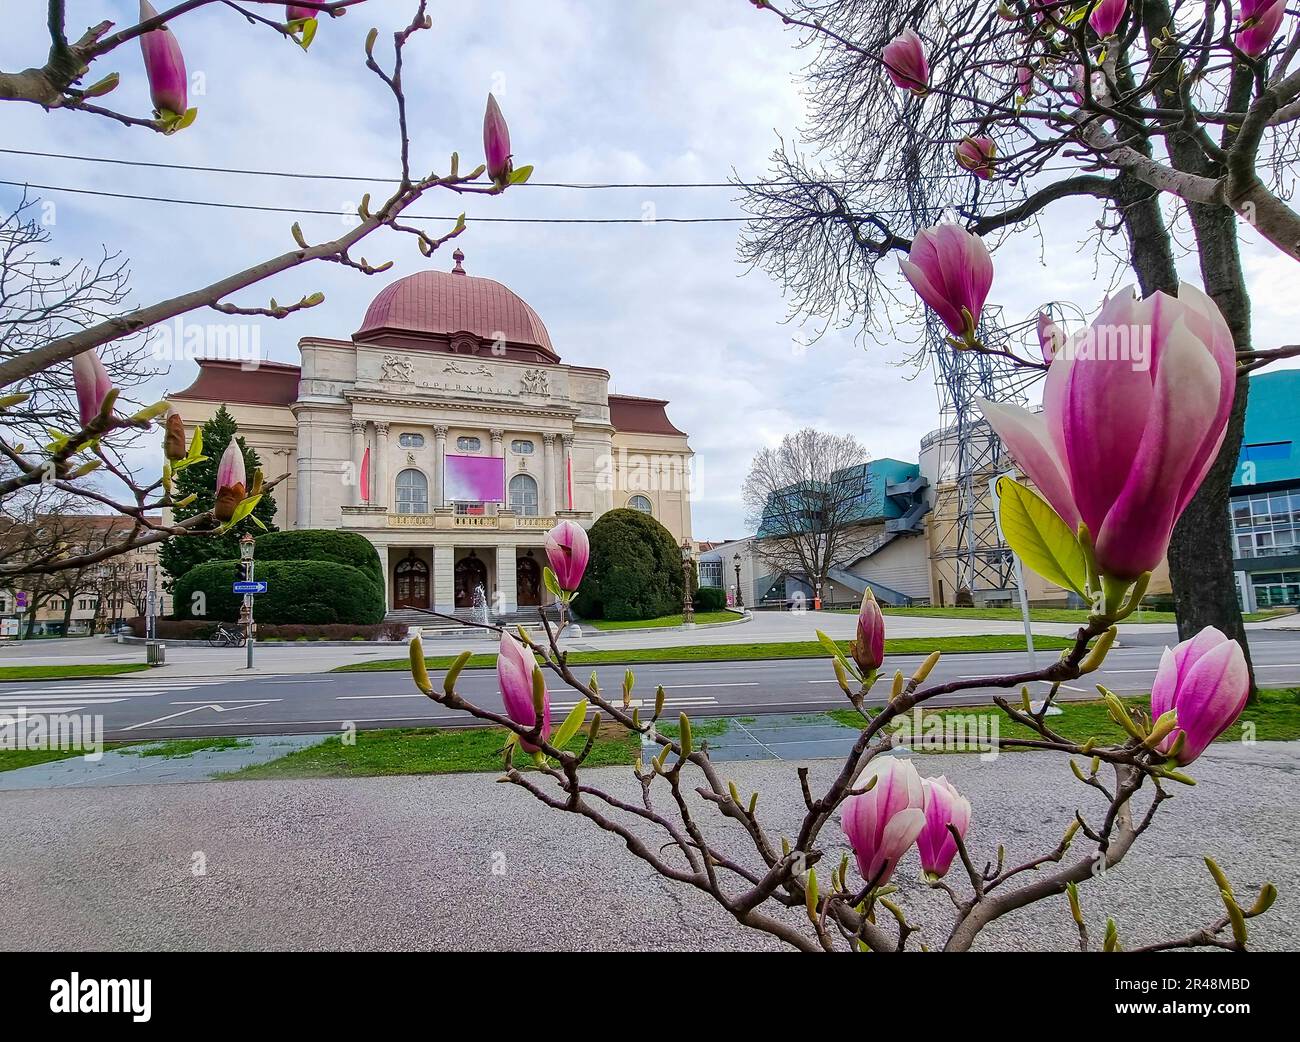 Exterior of Opera House building seen through magnolia flowers, in the city center of Graz, Steiermark region, Austria. Selective focus Stock Photo